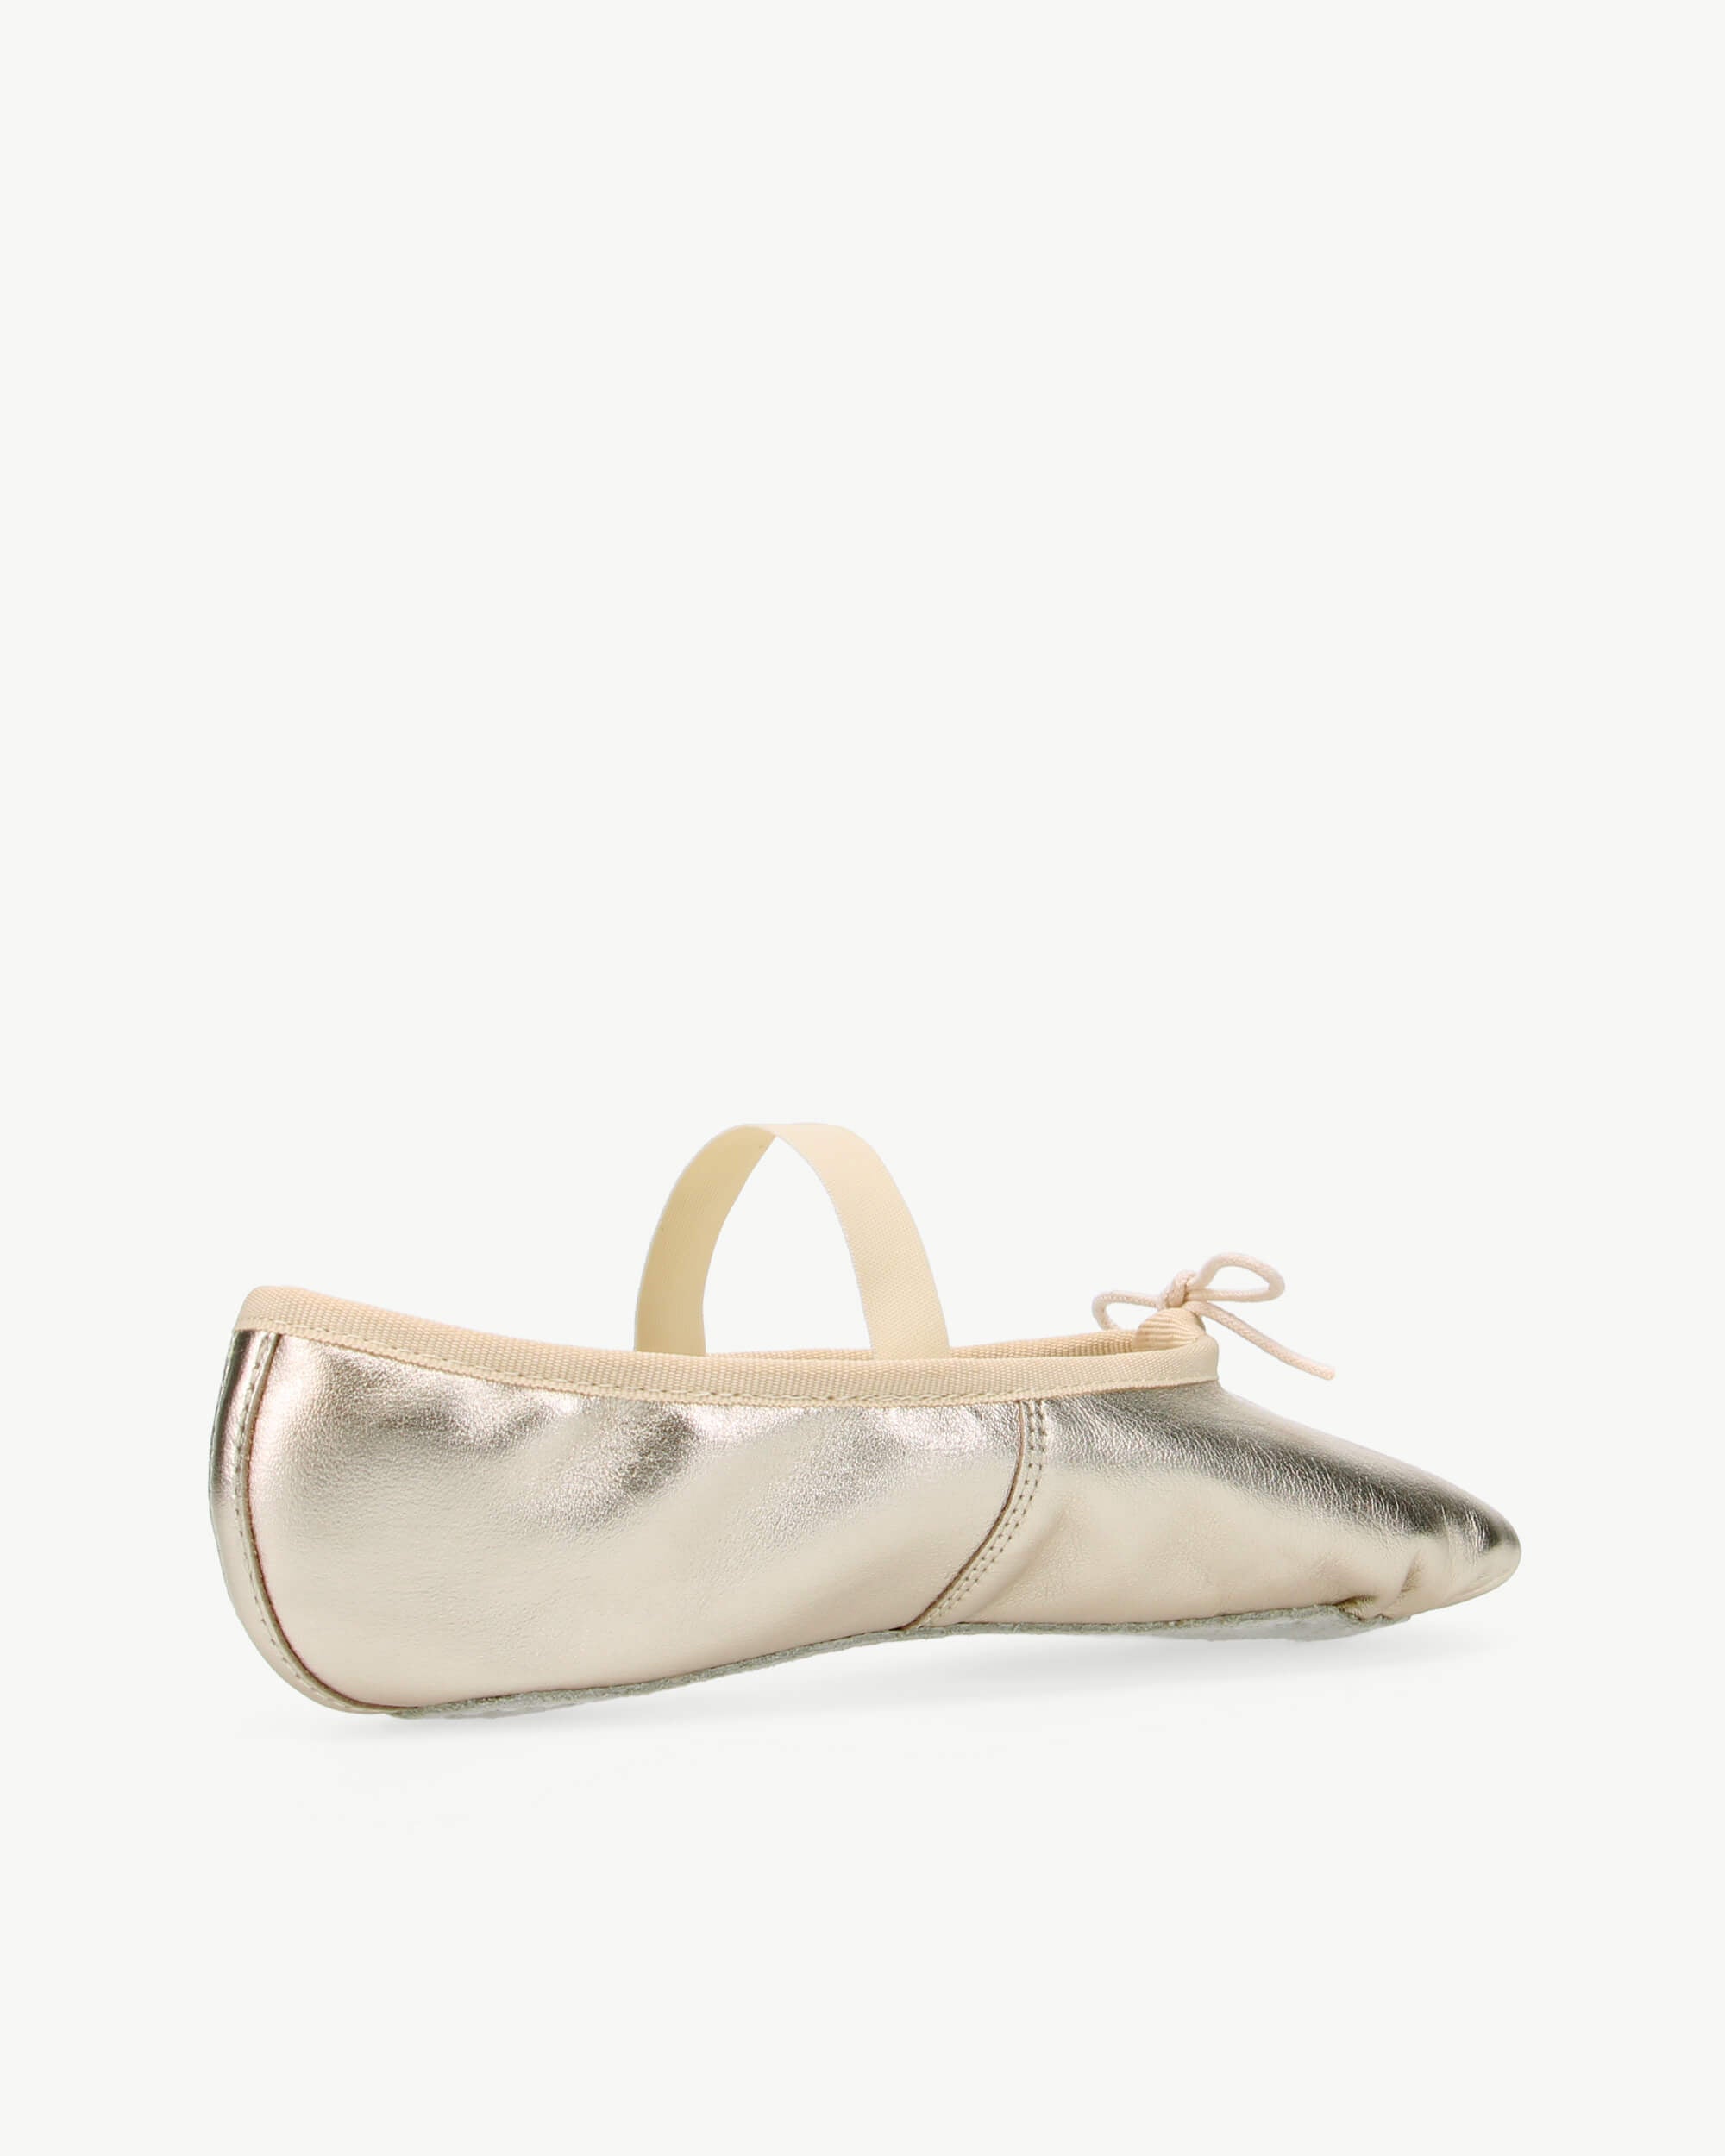 Leather soft ballet shoes - Repetto x Villa Magnan